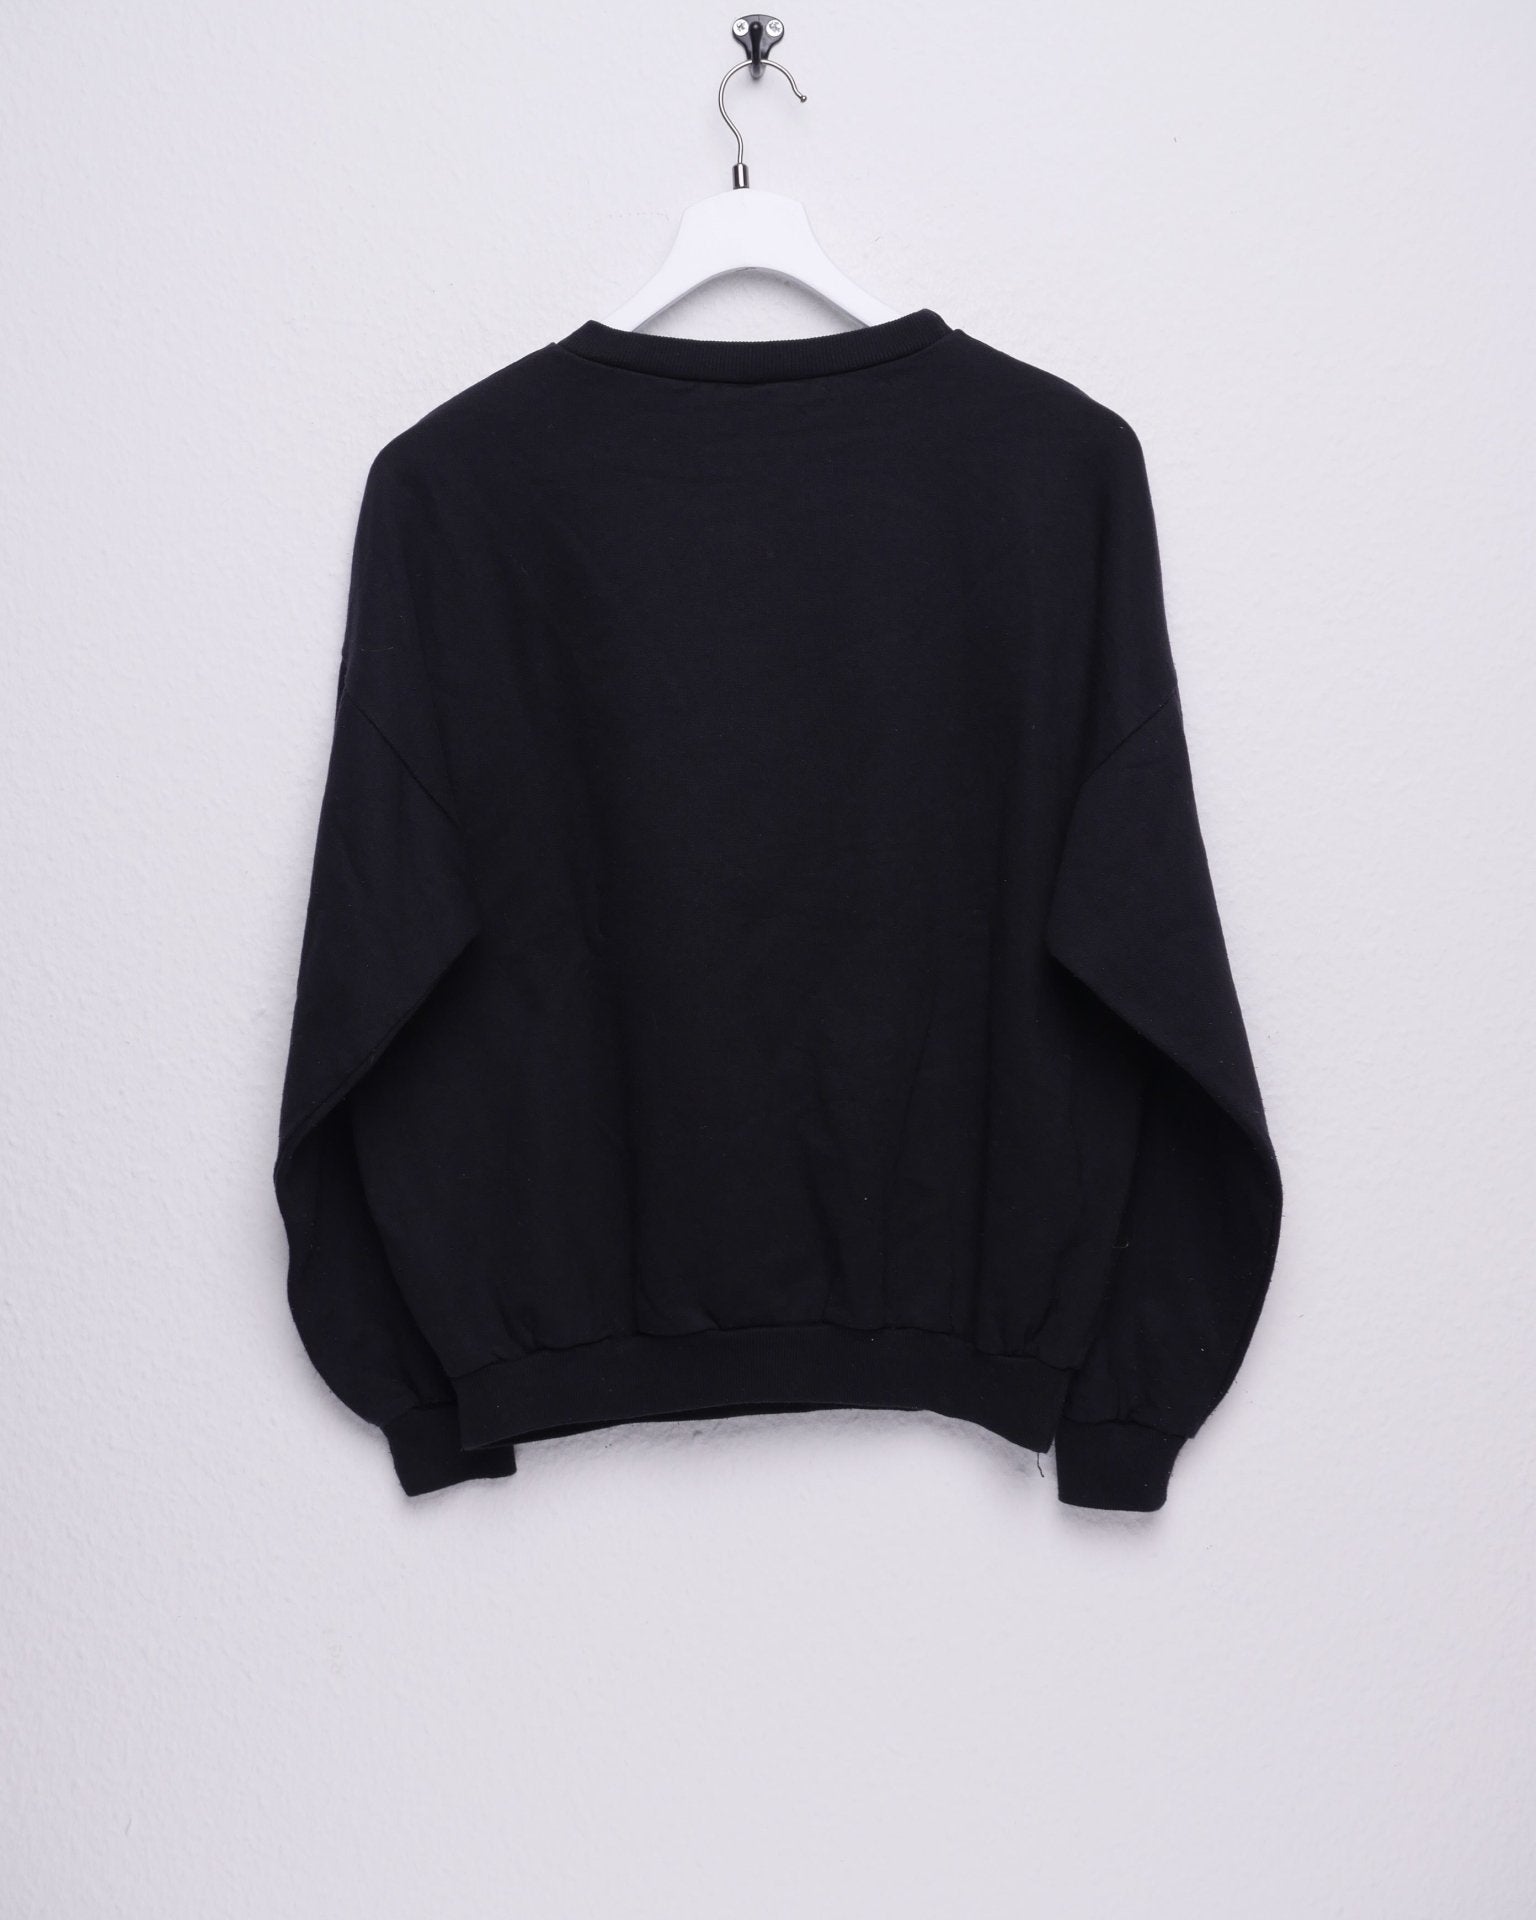 'Paris Paris' printed Spellout black Sweater - Peeces